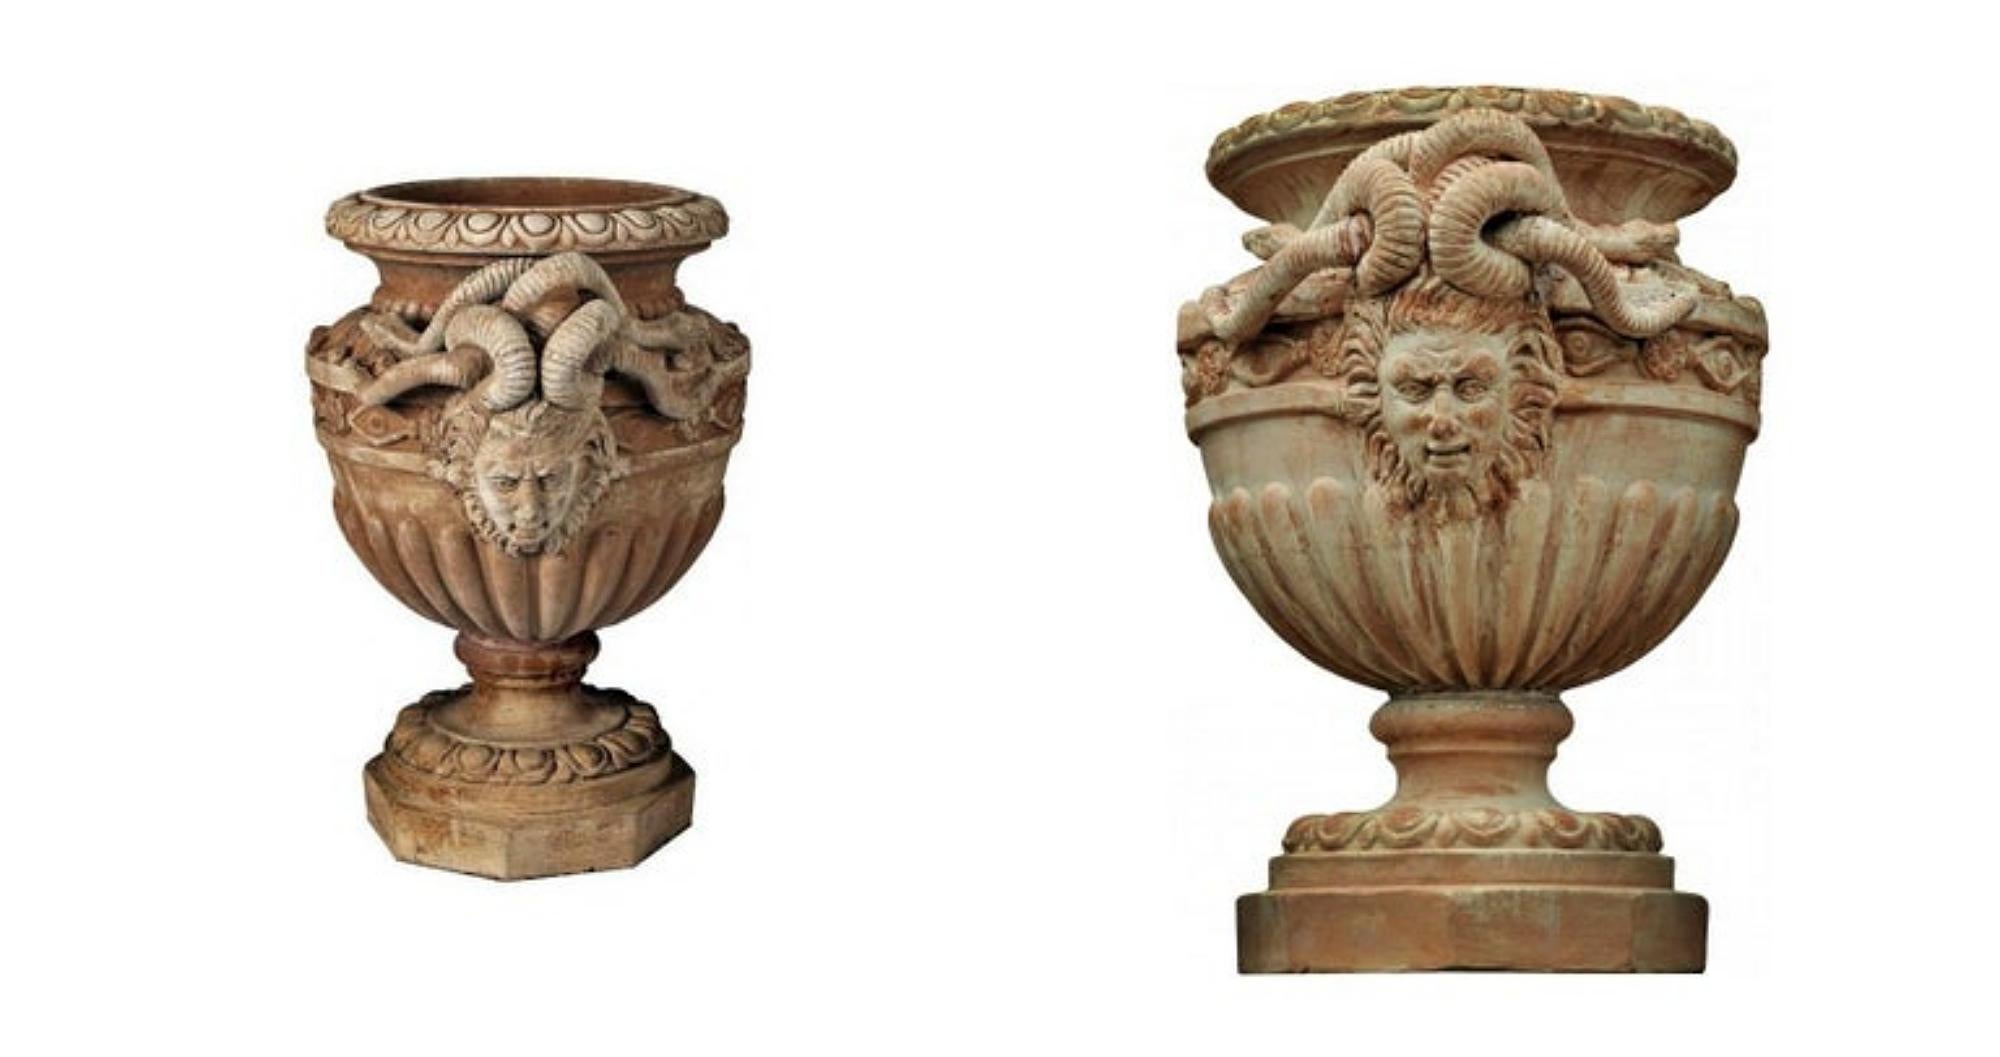 Modern Large Mediceo Florentine Renaissance Vase with Medusas Early 20th Century For Sale